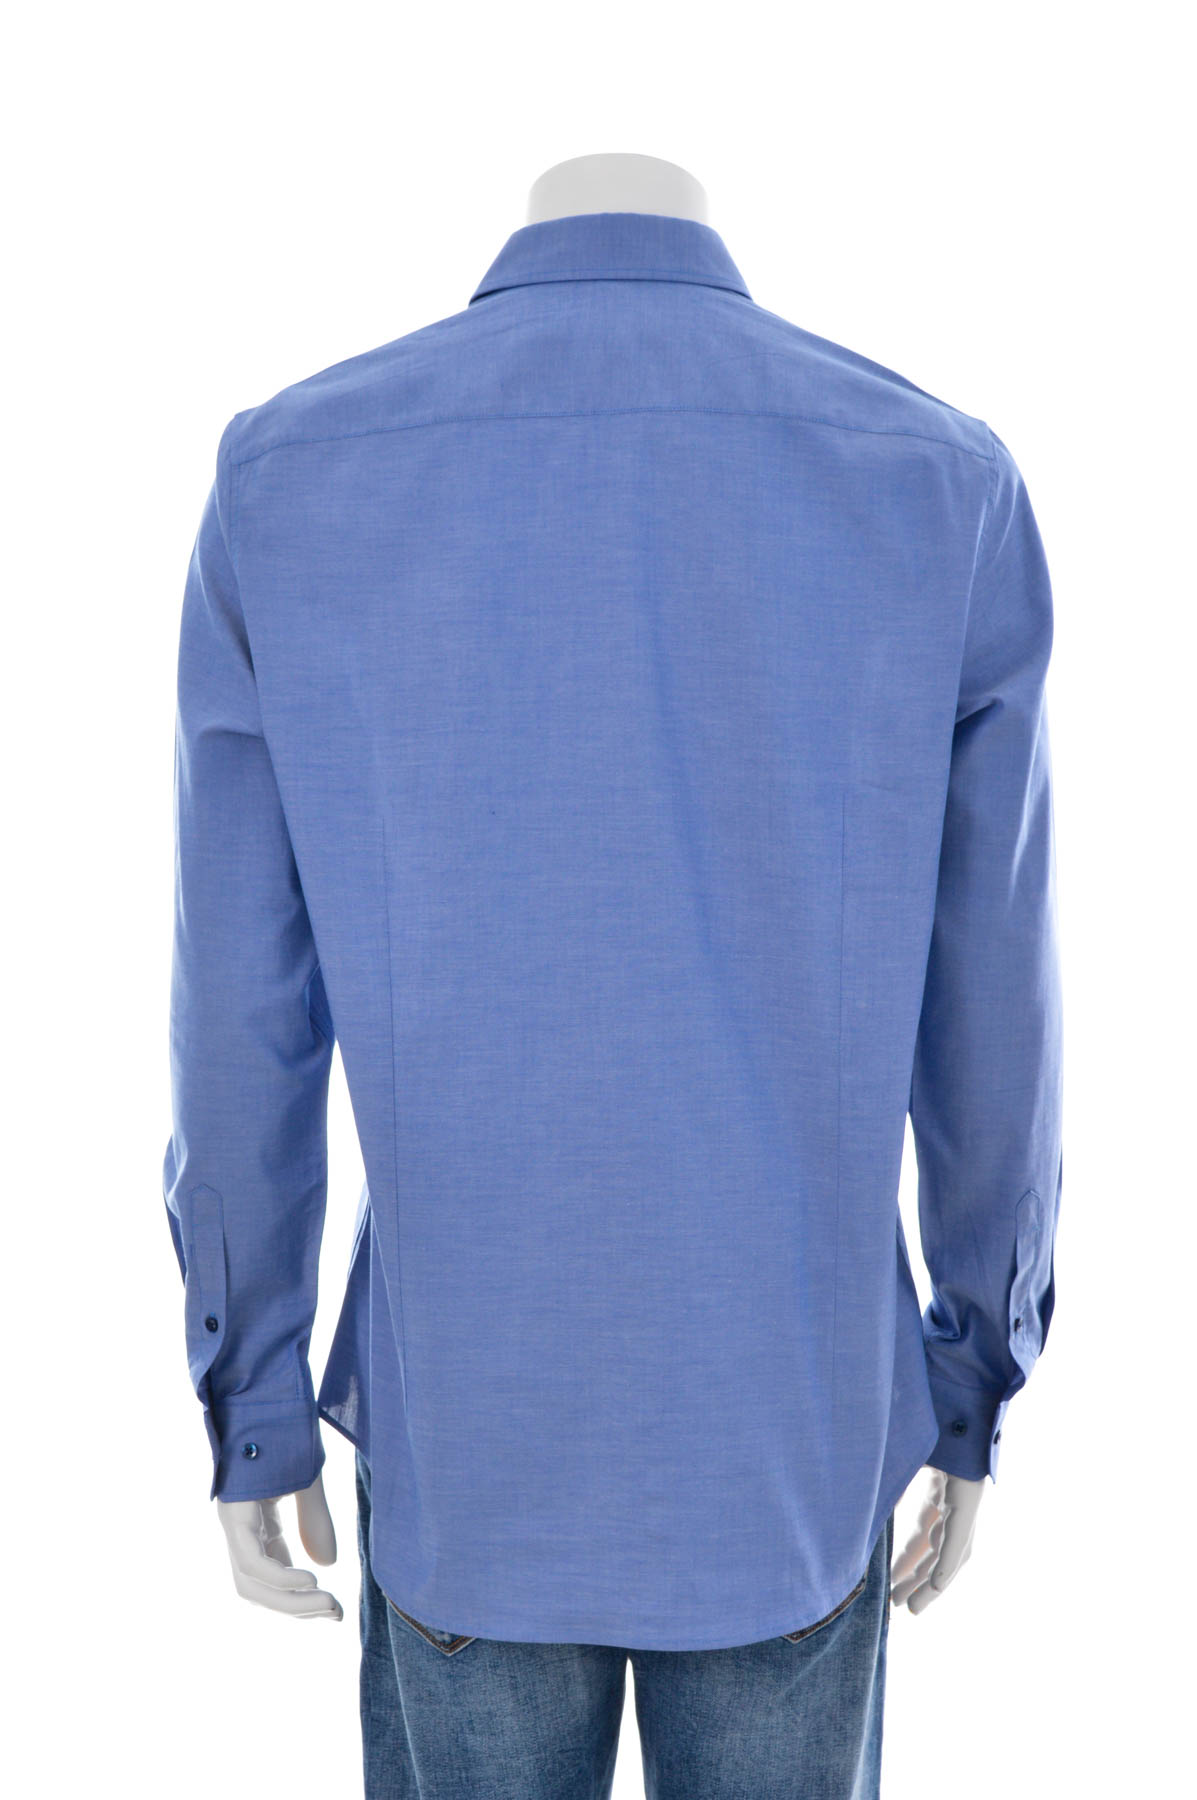 Men's shirt - KEYSTONE APPAREL - 1